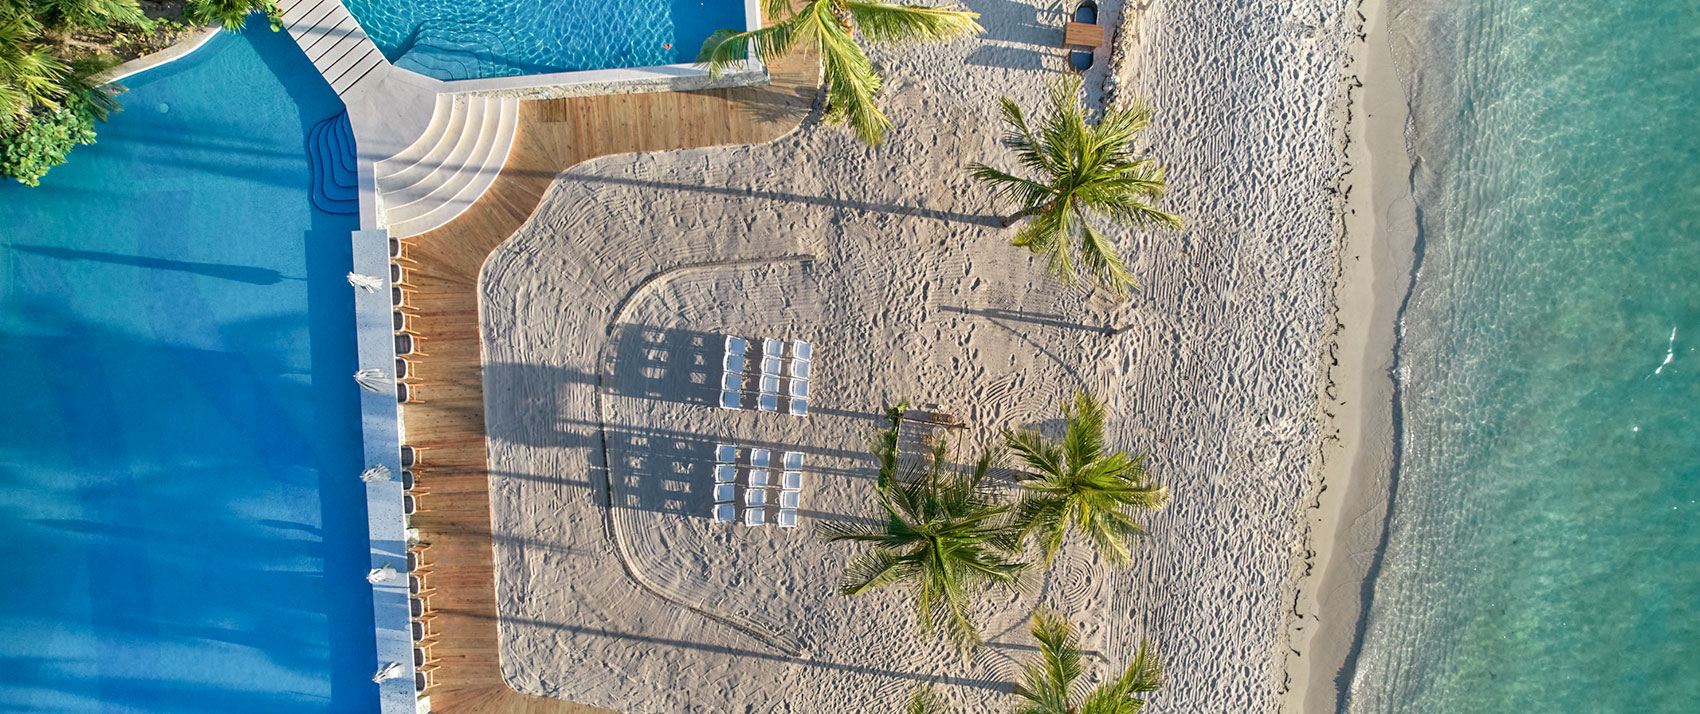 Overhead drone shot of Roatan beach with wedding chairs set-up